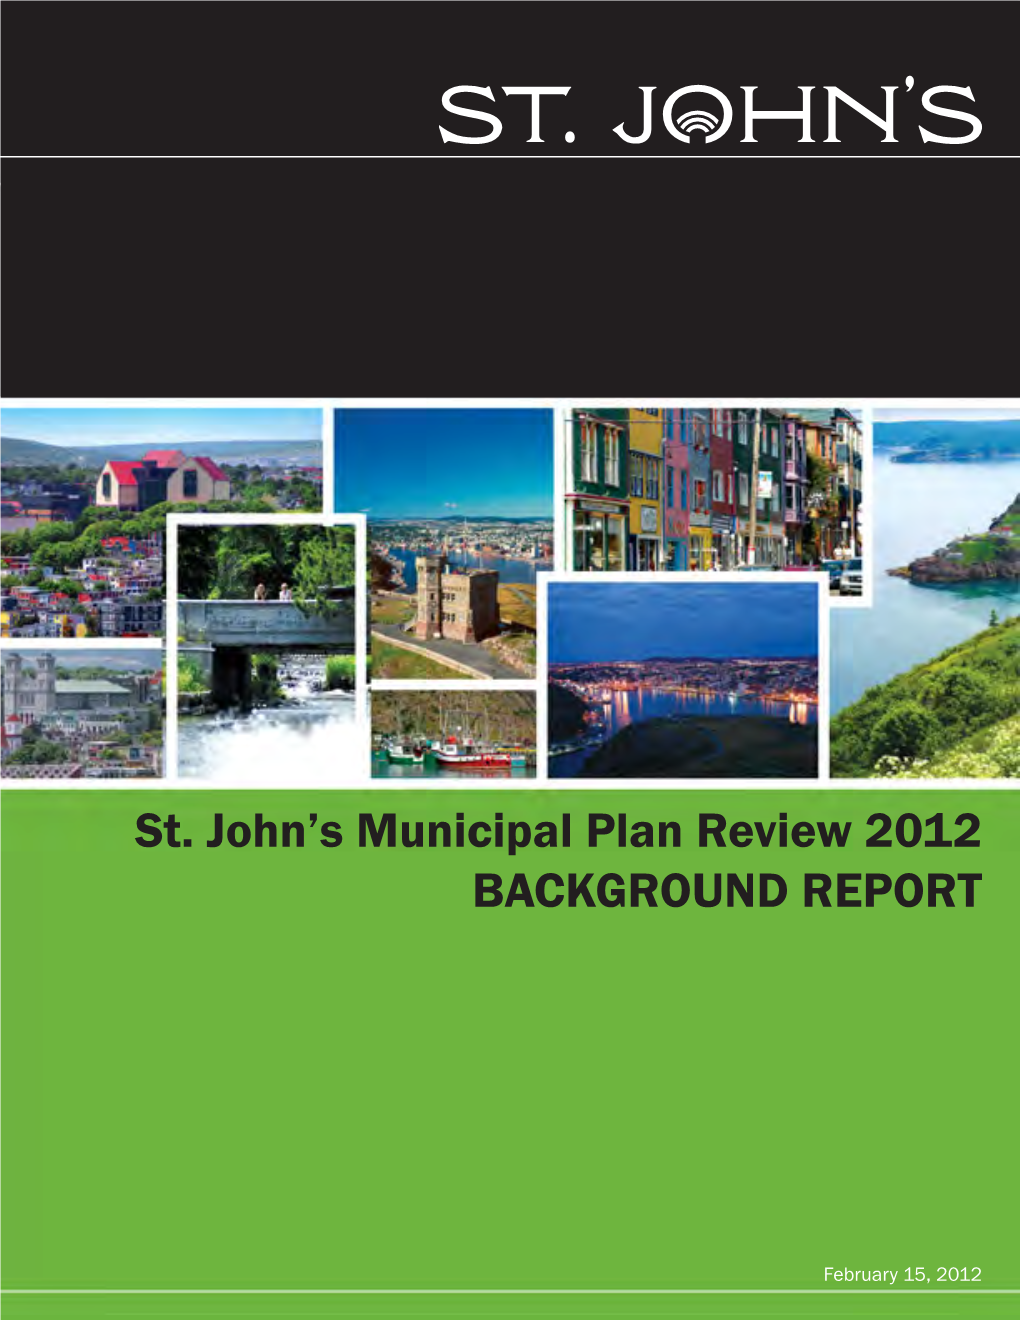 St. John's Municipal Plan Review 2012